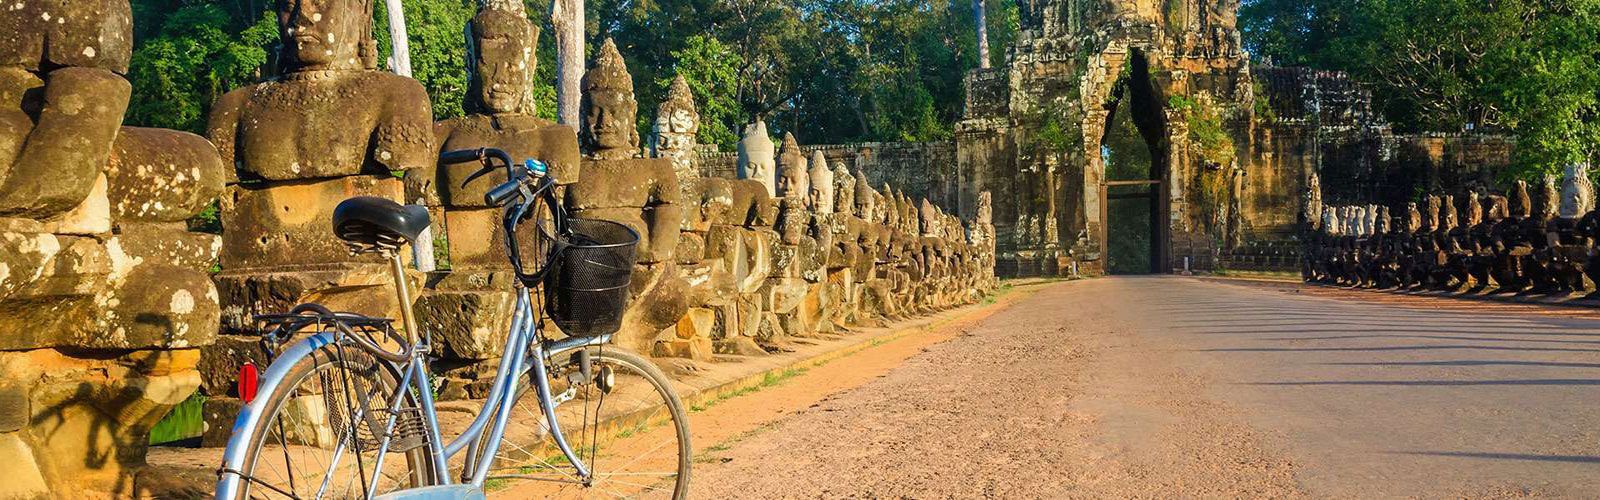 Cambodia Tours Activities